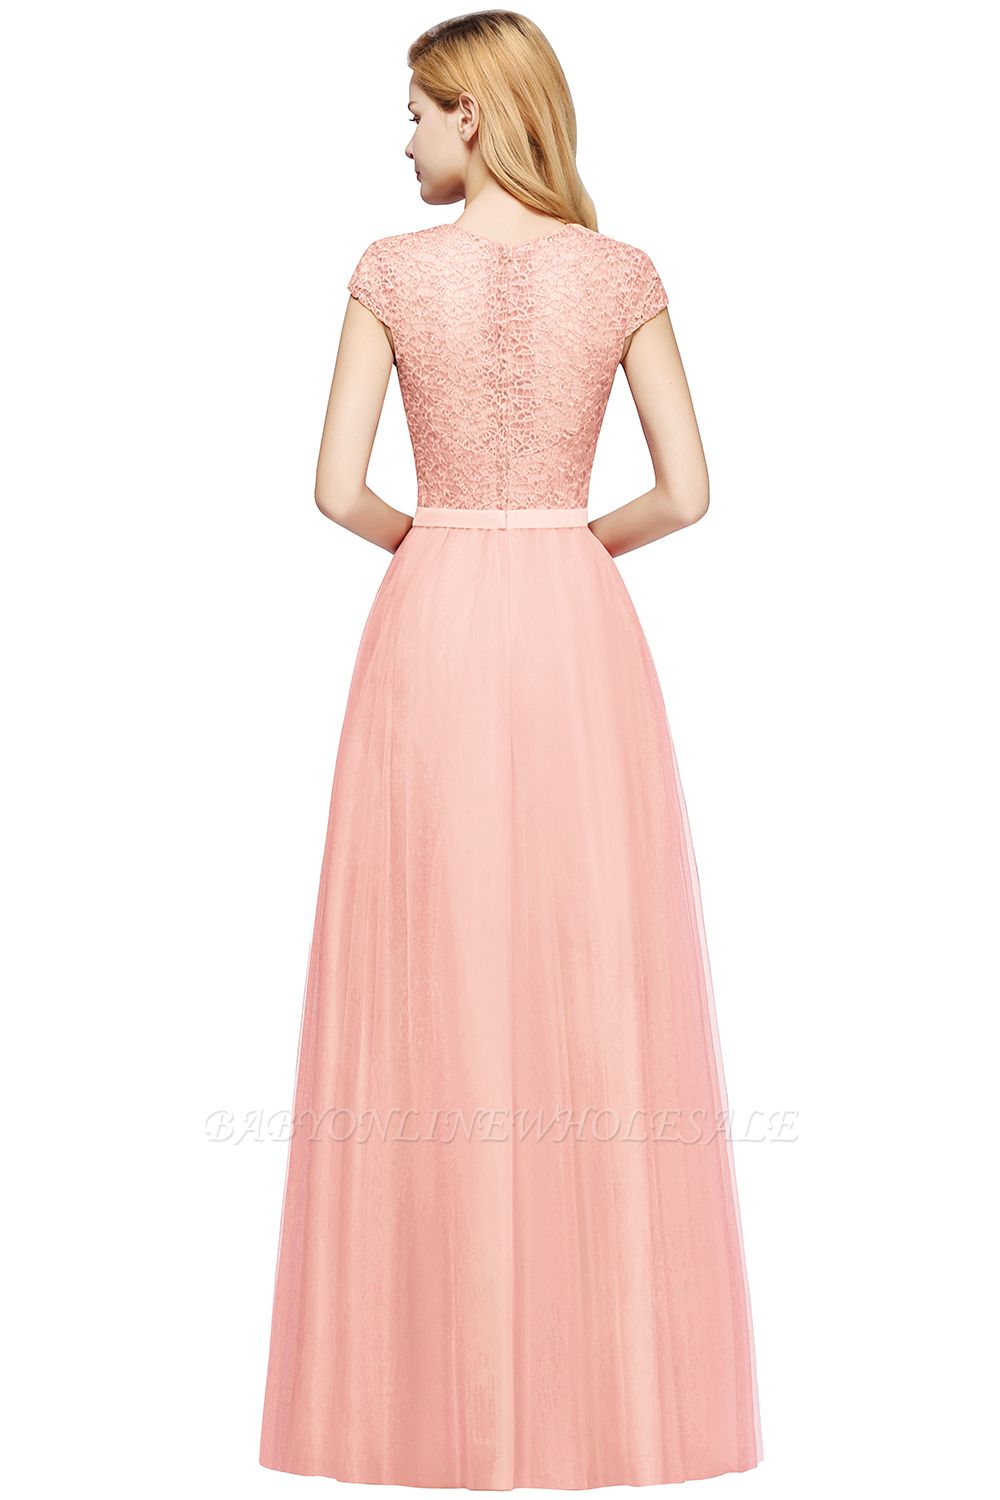 Elegant Lace Top Cap Sleeves Long Tulle Bridesmaid Dresses ...